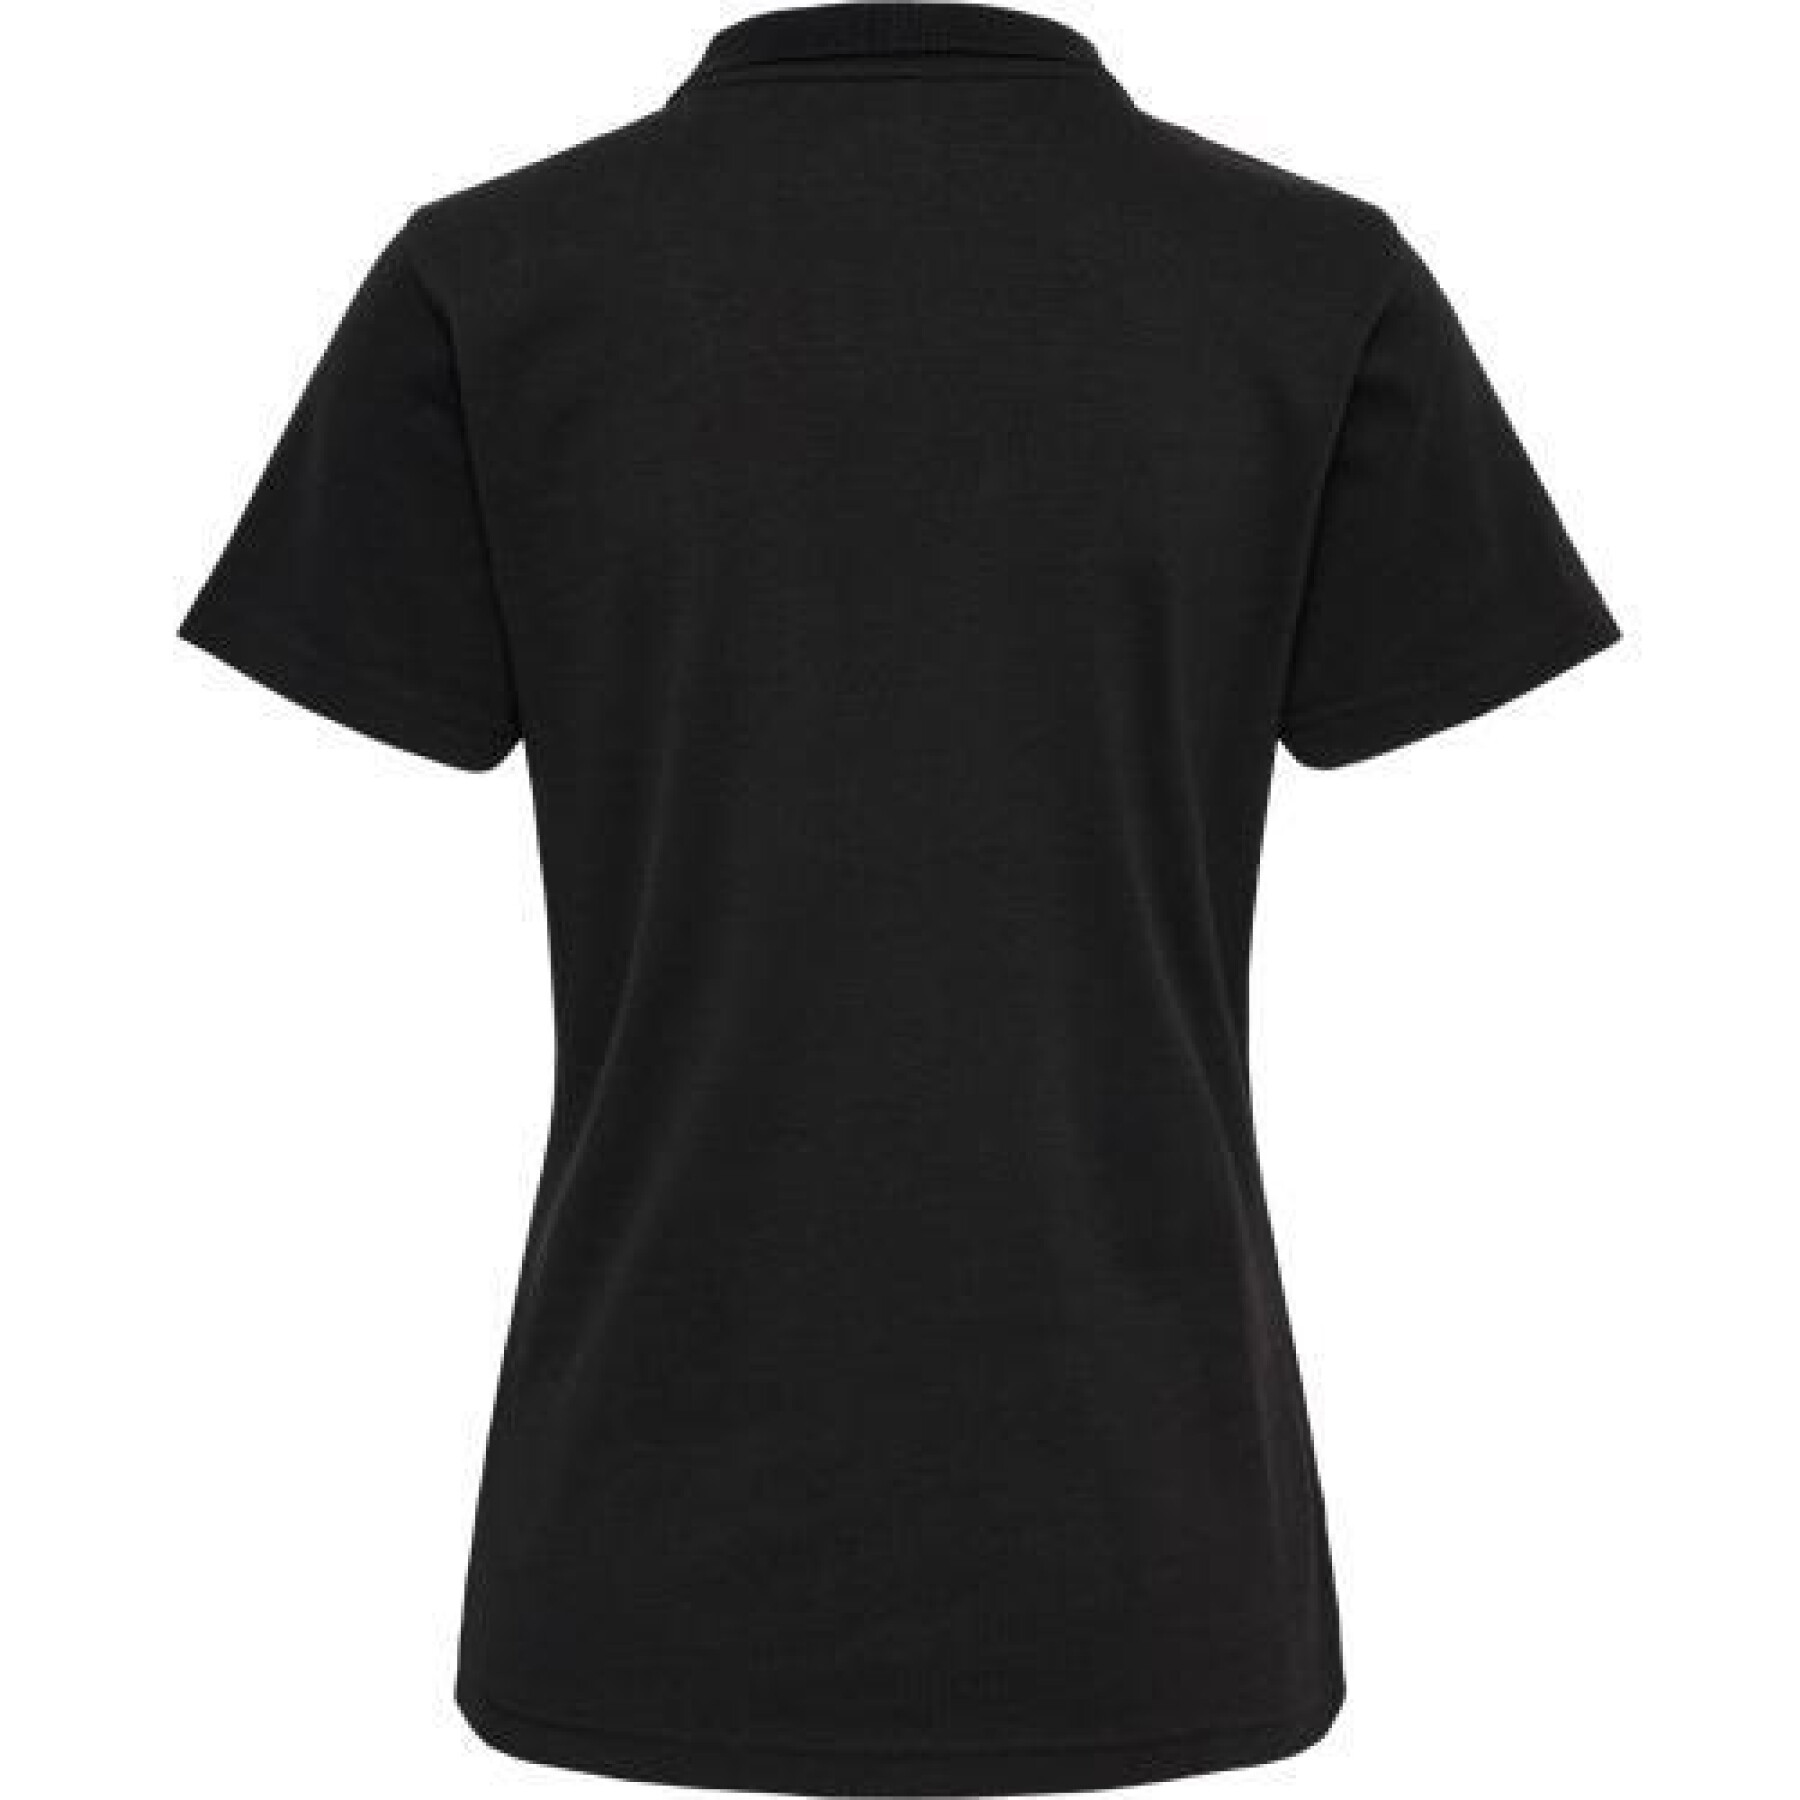 Women's cotton polo shirt Newline Lea